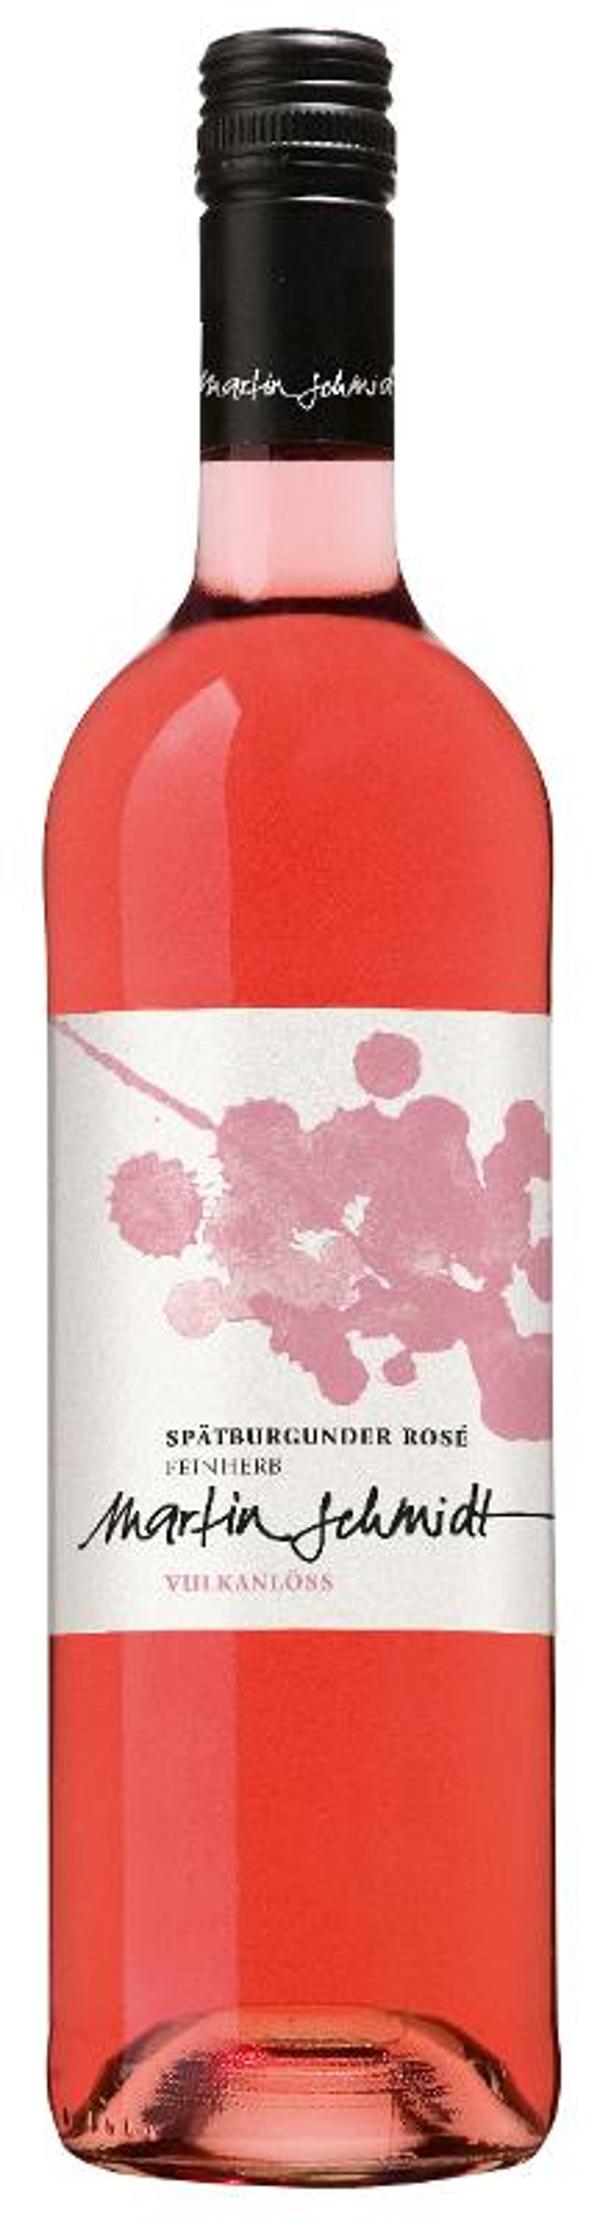 Produktfoto zu Vulkanlöss rosé 0,75 l Kiefer